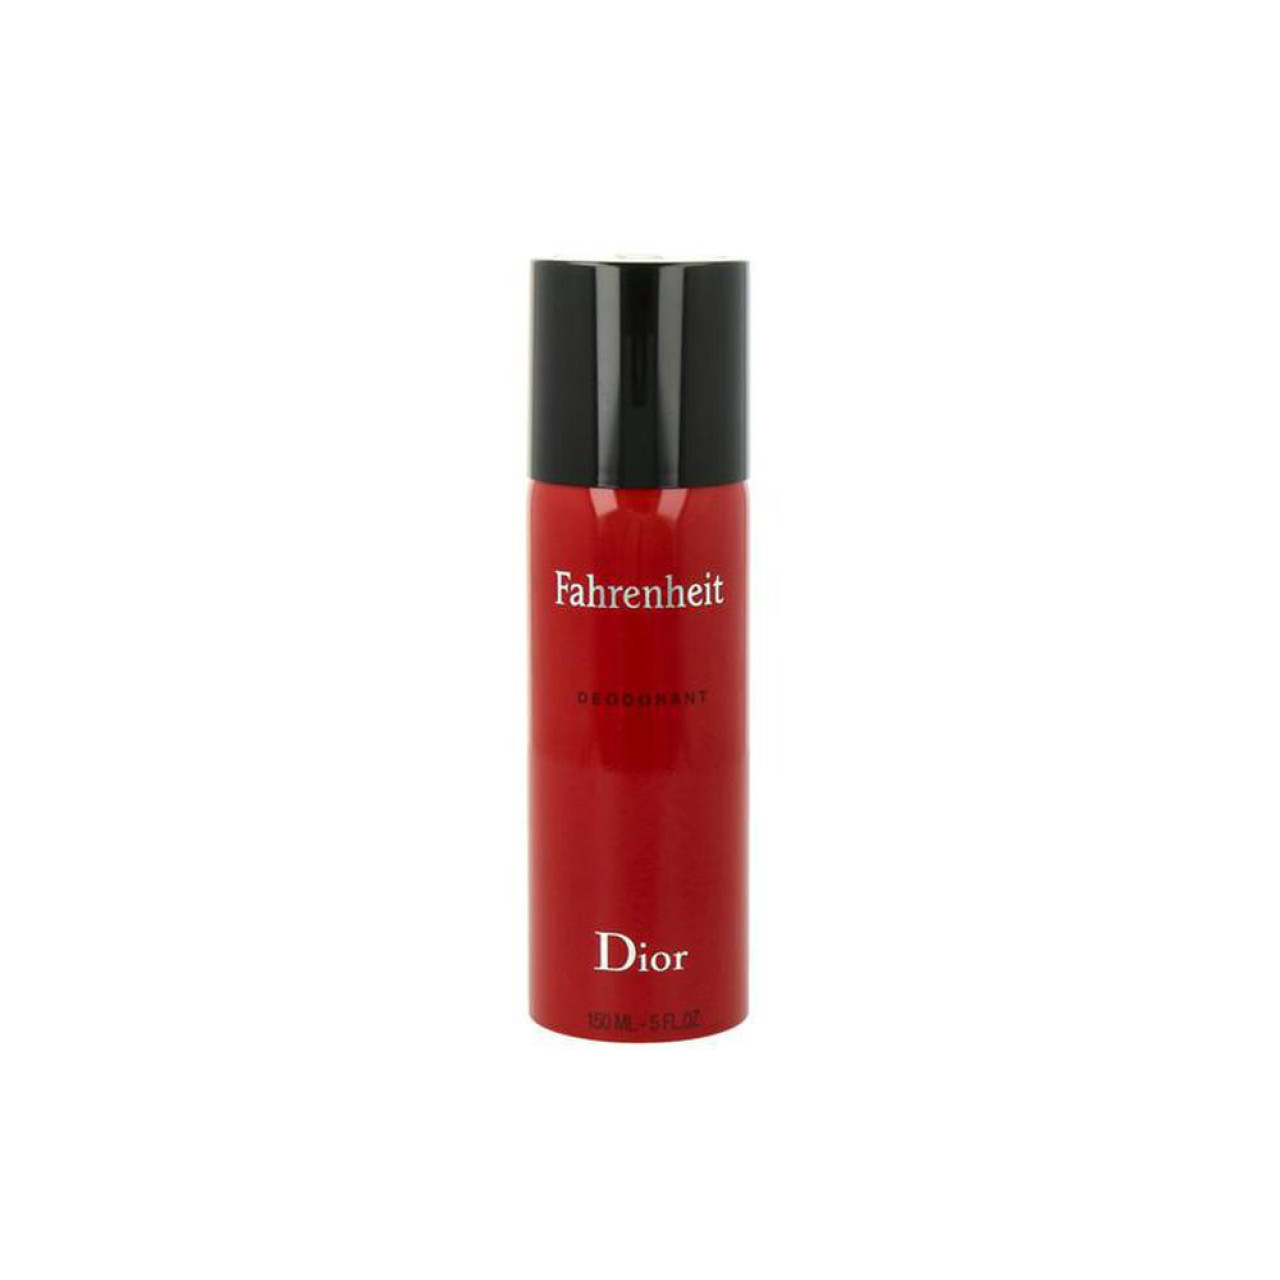 Dior Fahrenheit deodorant 150ml